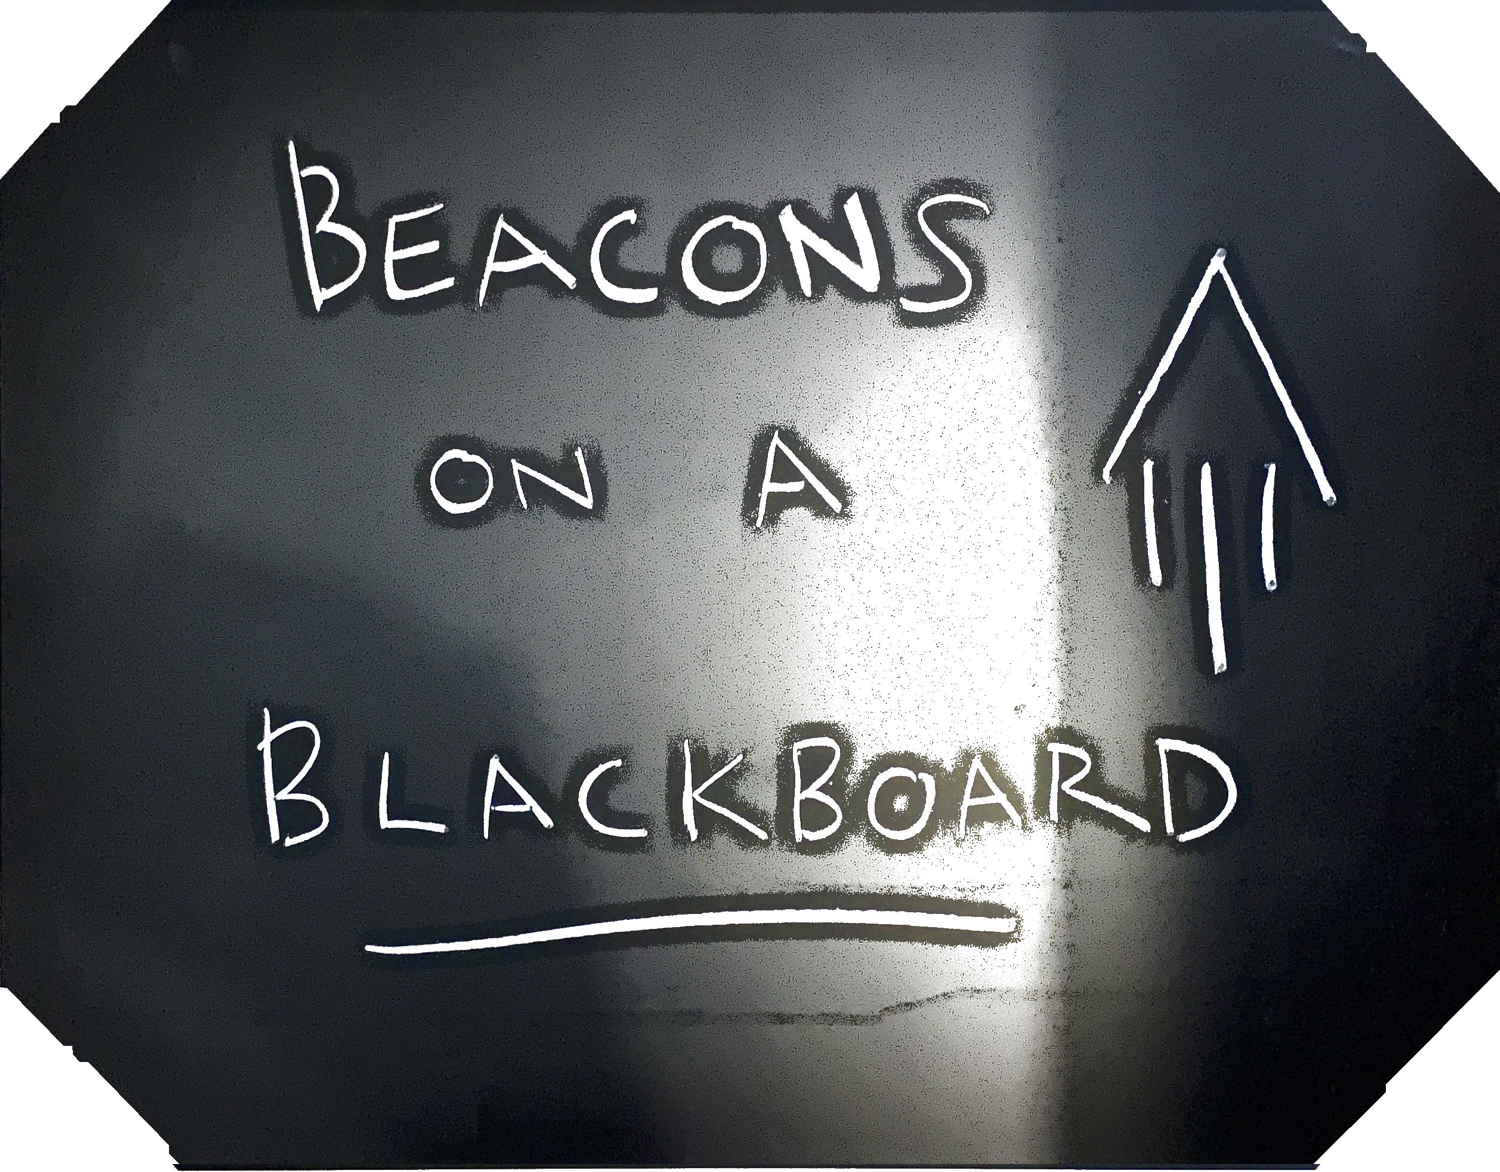 Blackboard_Beacons.jpg